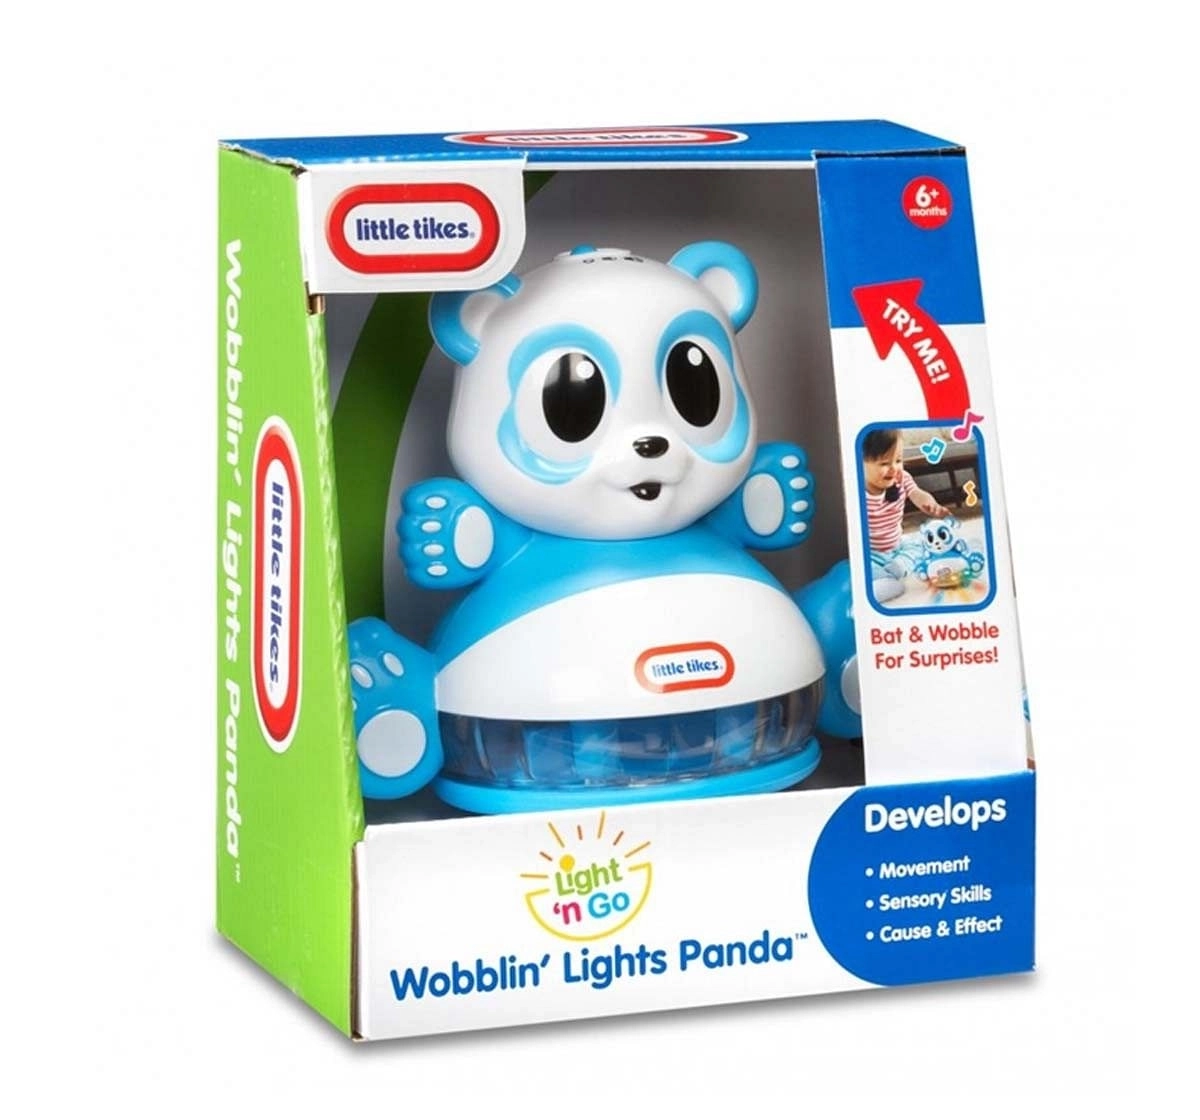 Little Tikes Wobblin' Lights Panda Activity Toys for Kids Age 6M+